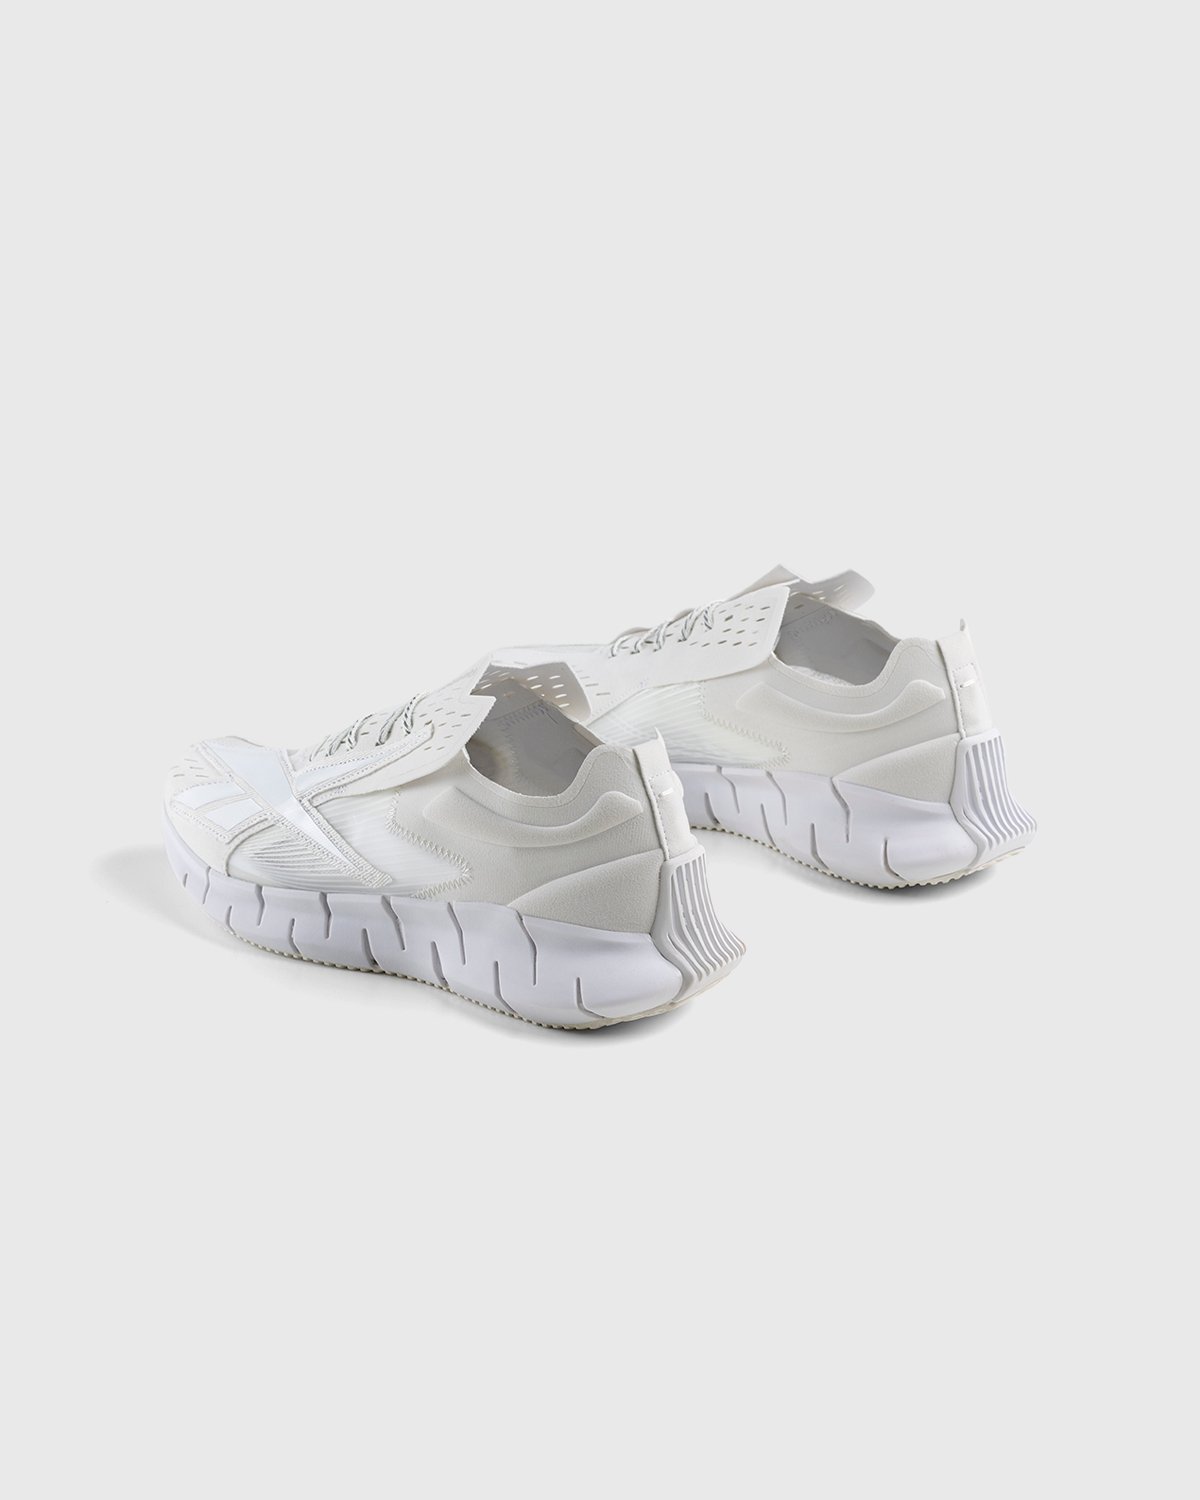 Reebok x Maison Margiela - Zig 3D Storm Memory Of White - Footwear - White - Image 4